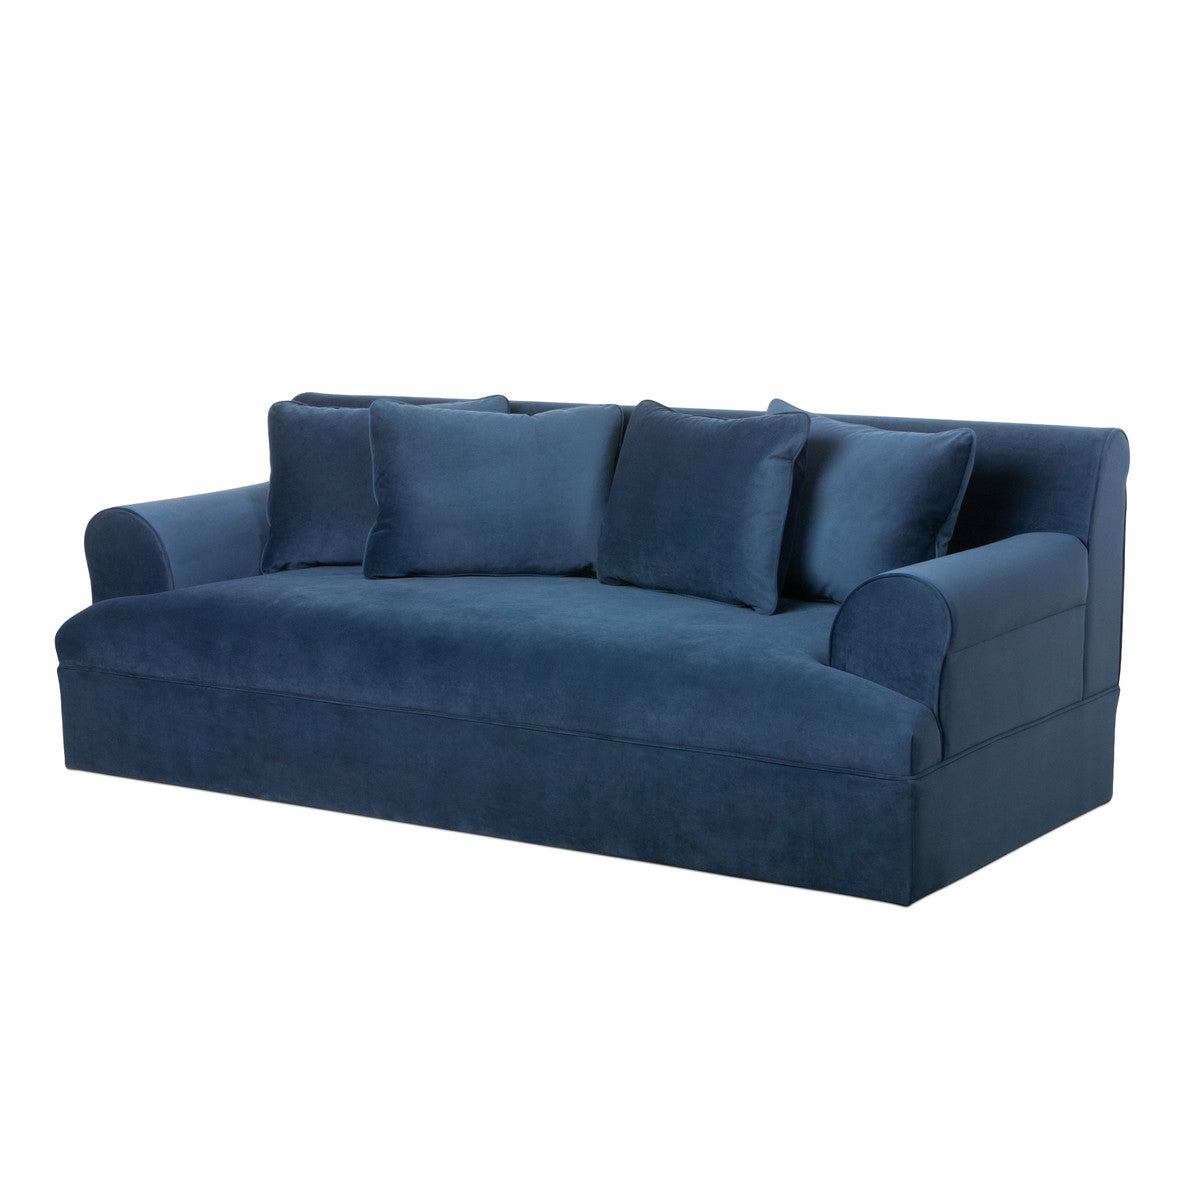 Estate Sofa, Atlantic Blue by Park Hill